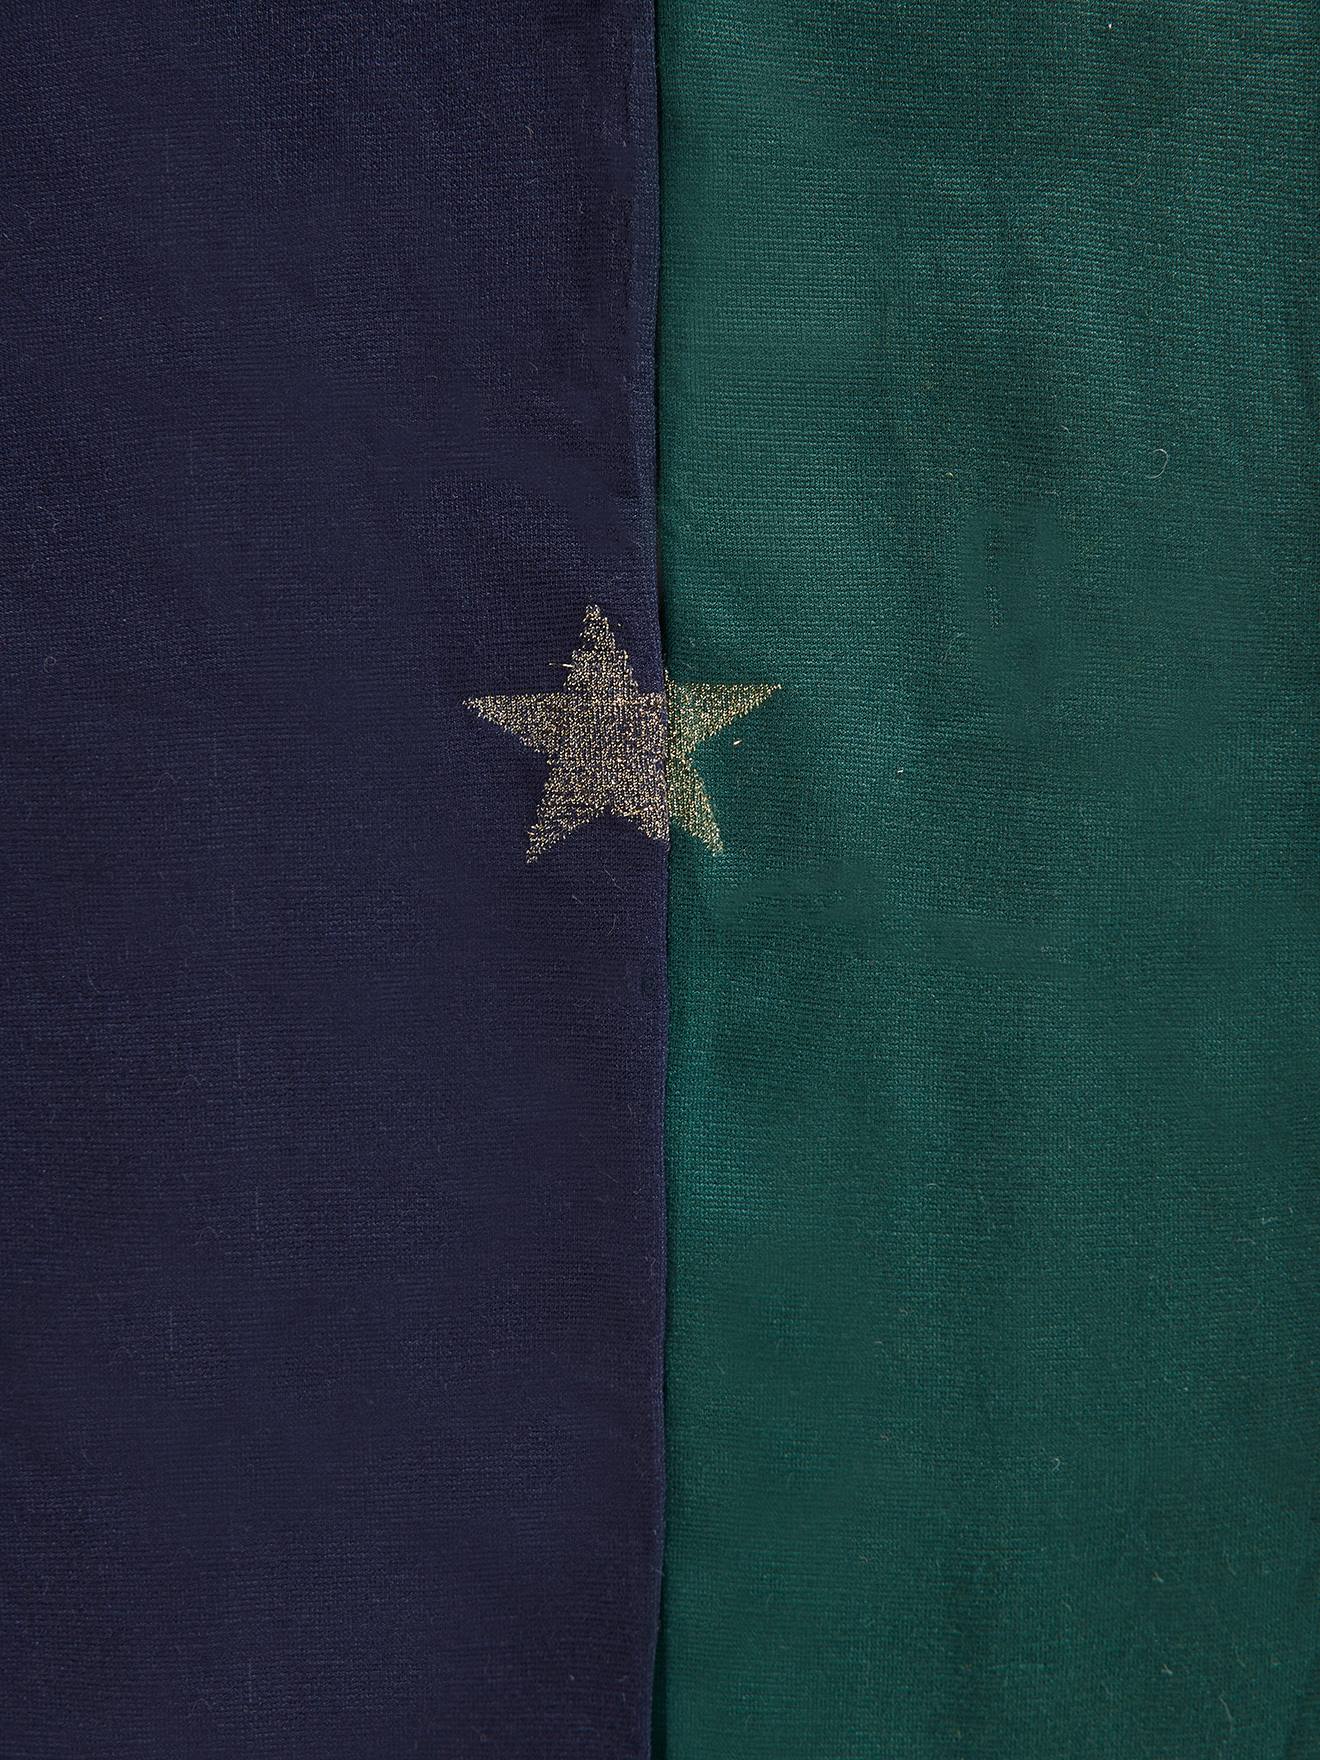 Pack de 2 medias con estrellas de poliamida para niña verde